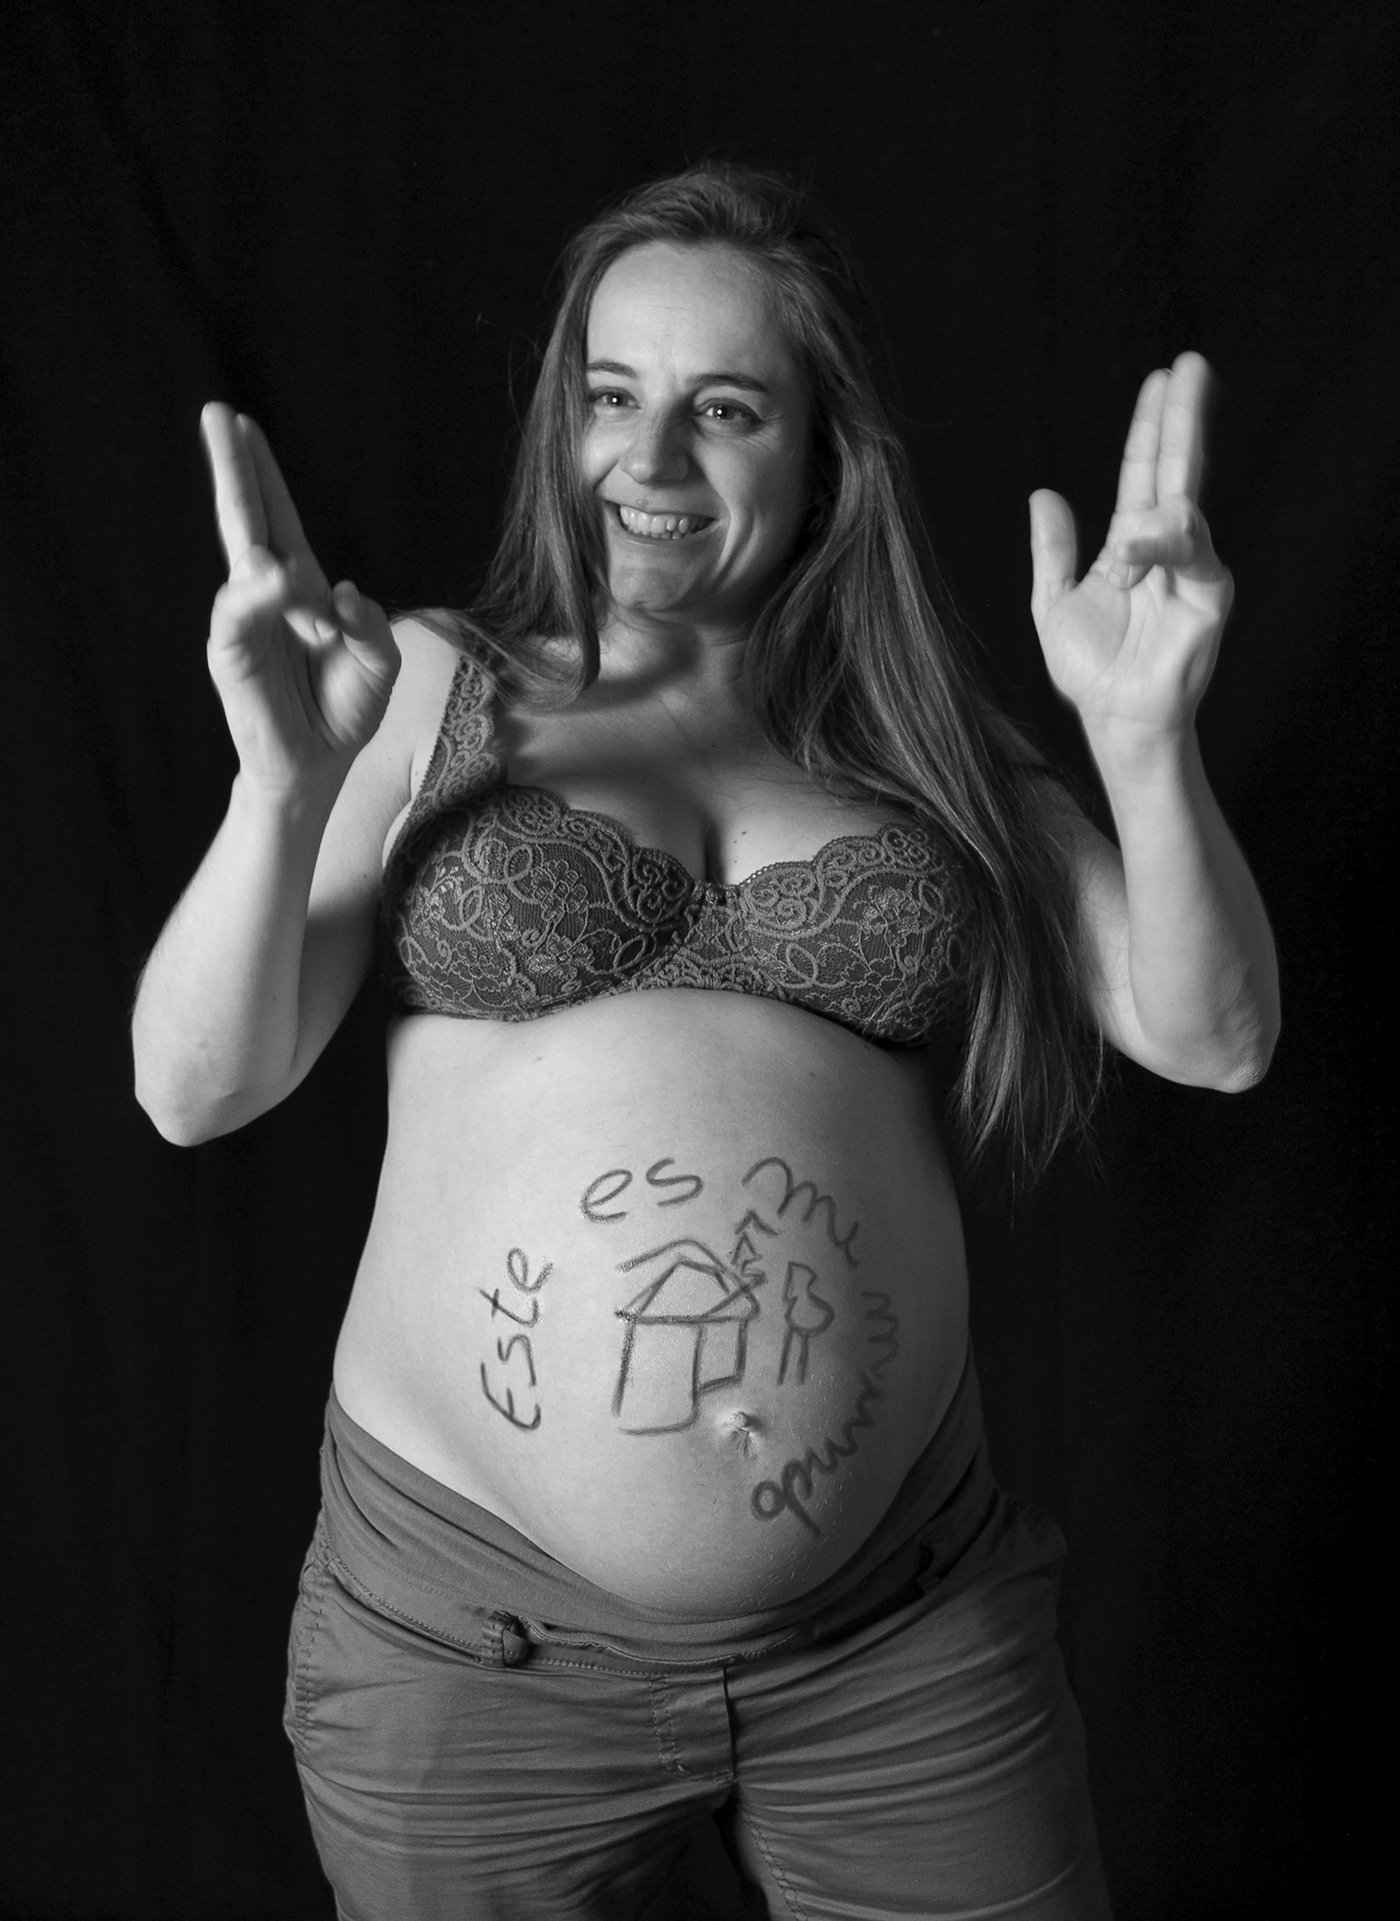 portrait model b&w retouch photo dark Maternity portrait photography